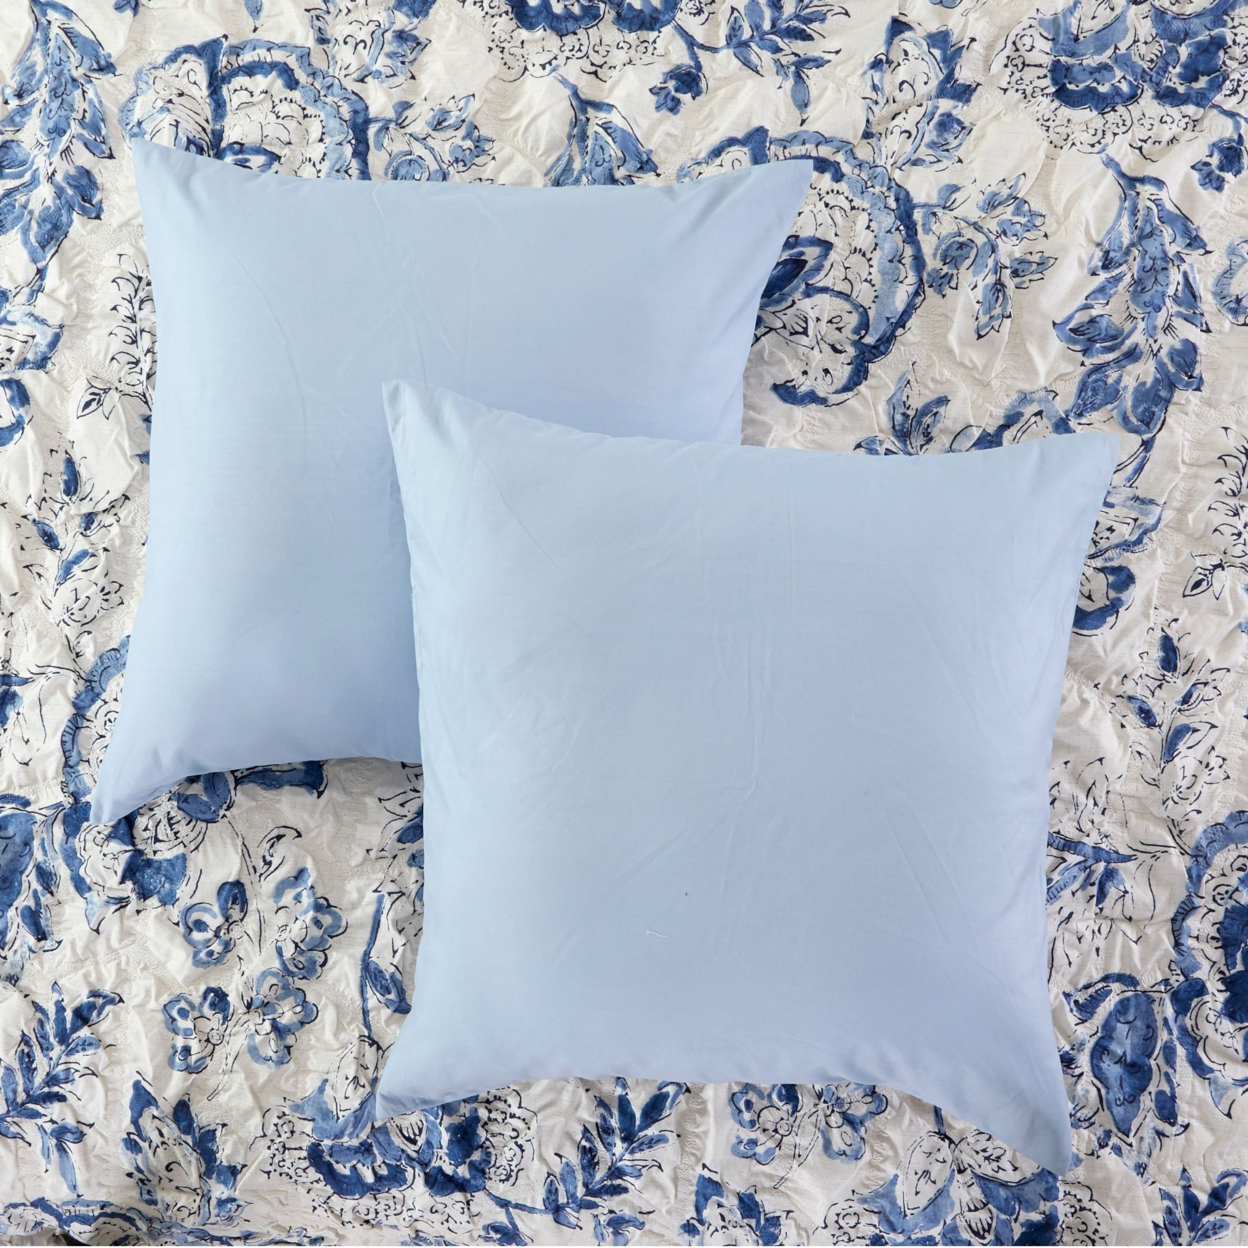 Corfu Floral Print 8 Piece Queen Comforter Set The Urban Port, White And Blue- Saltoro Sherpi